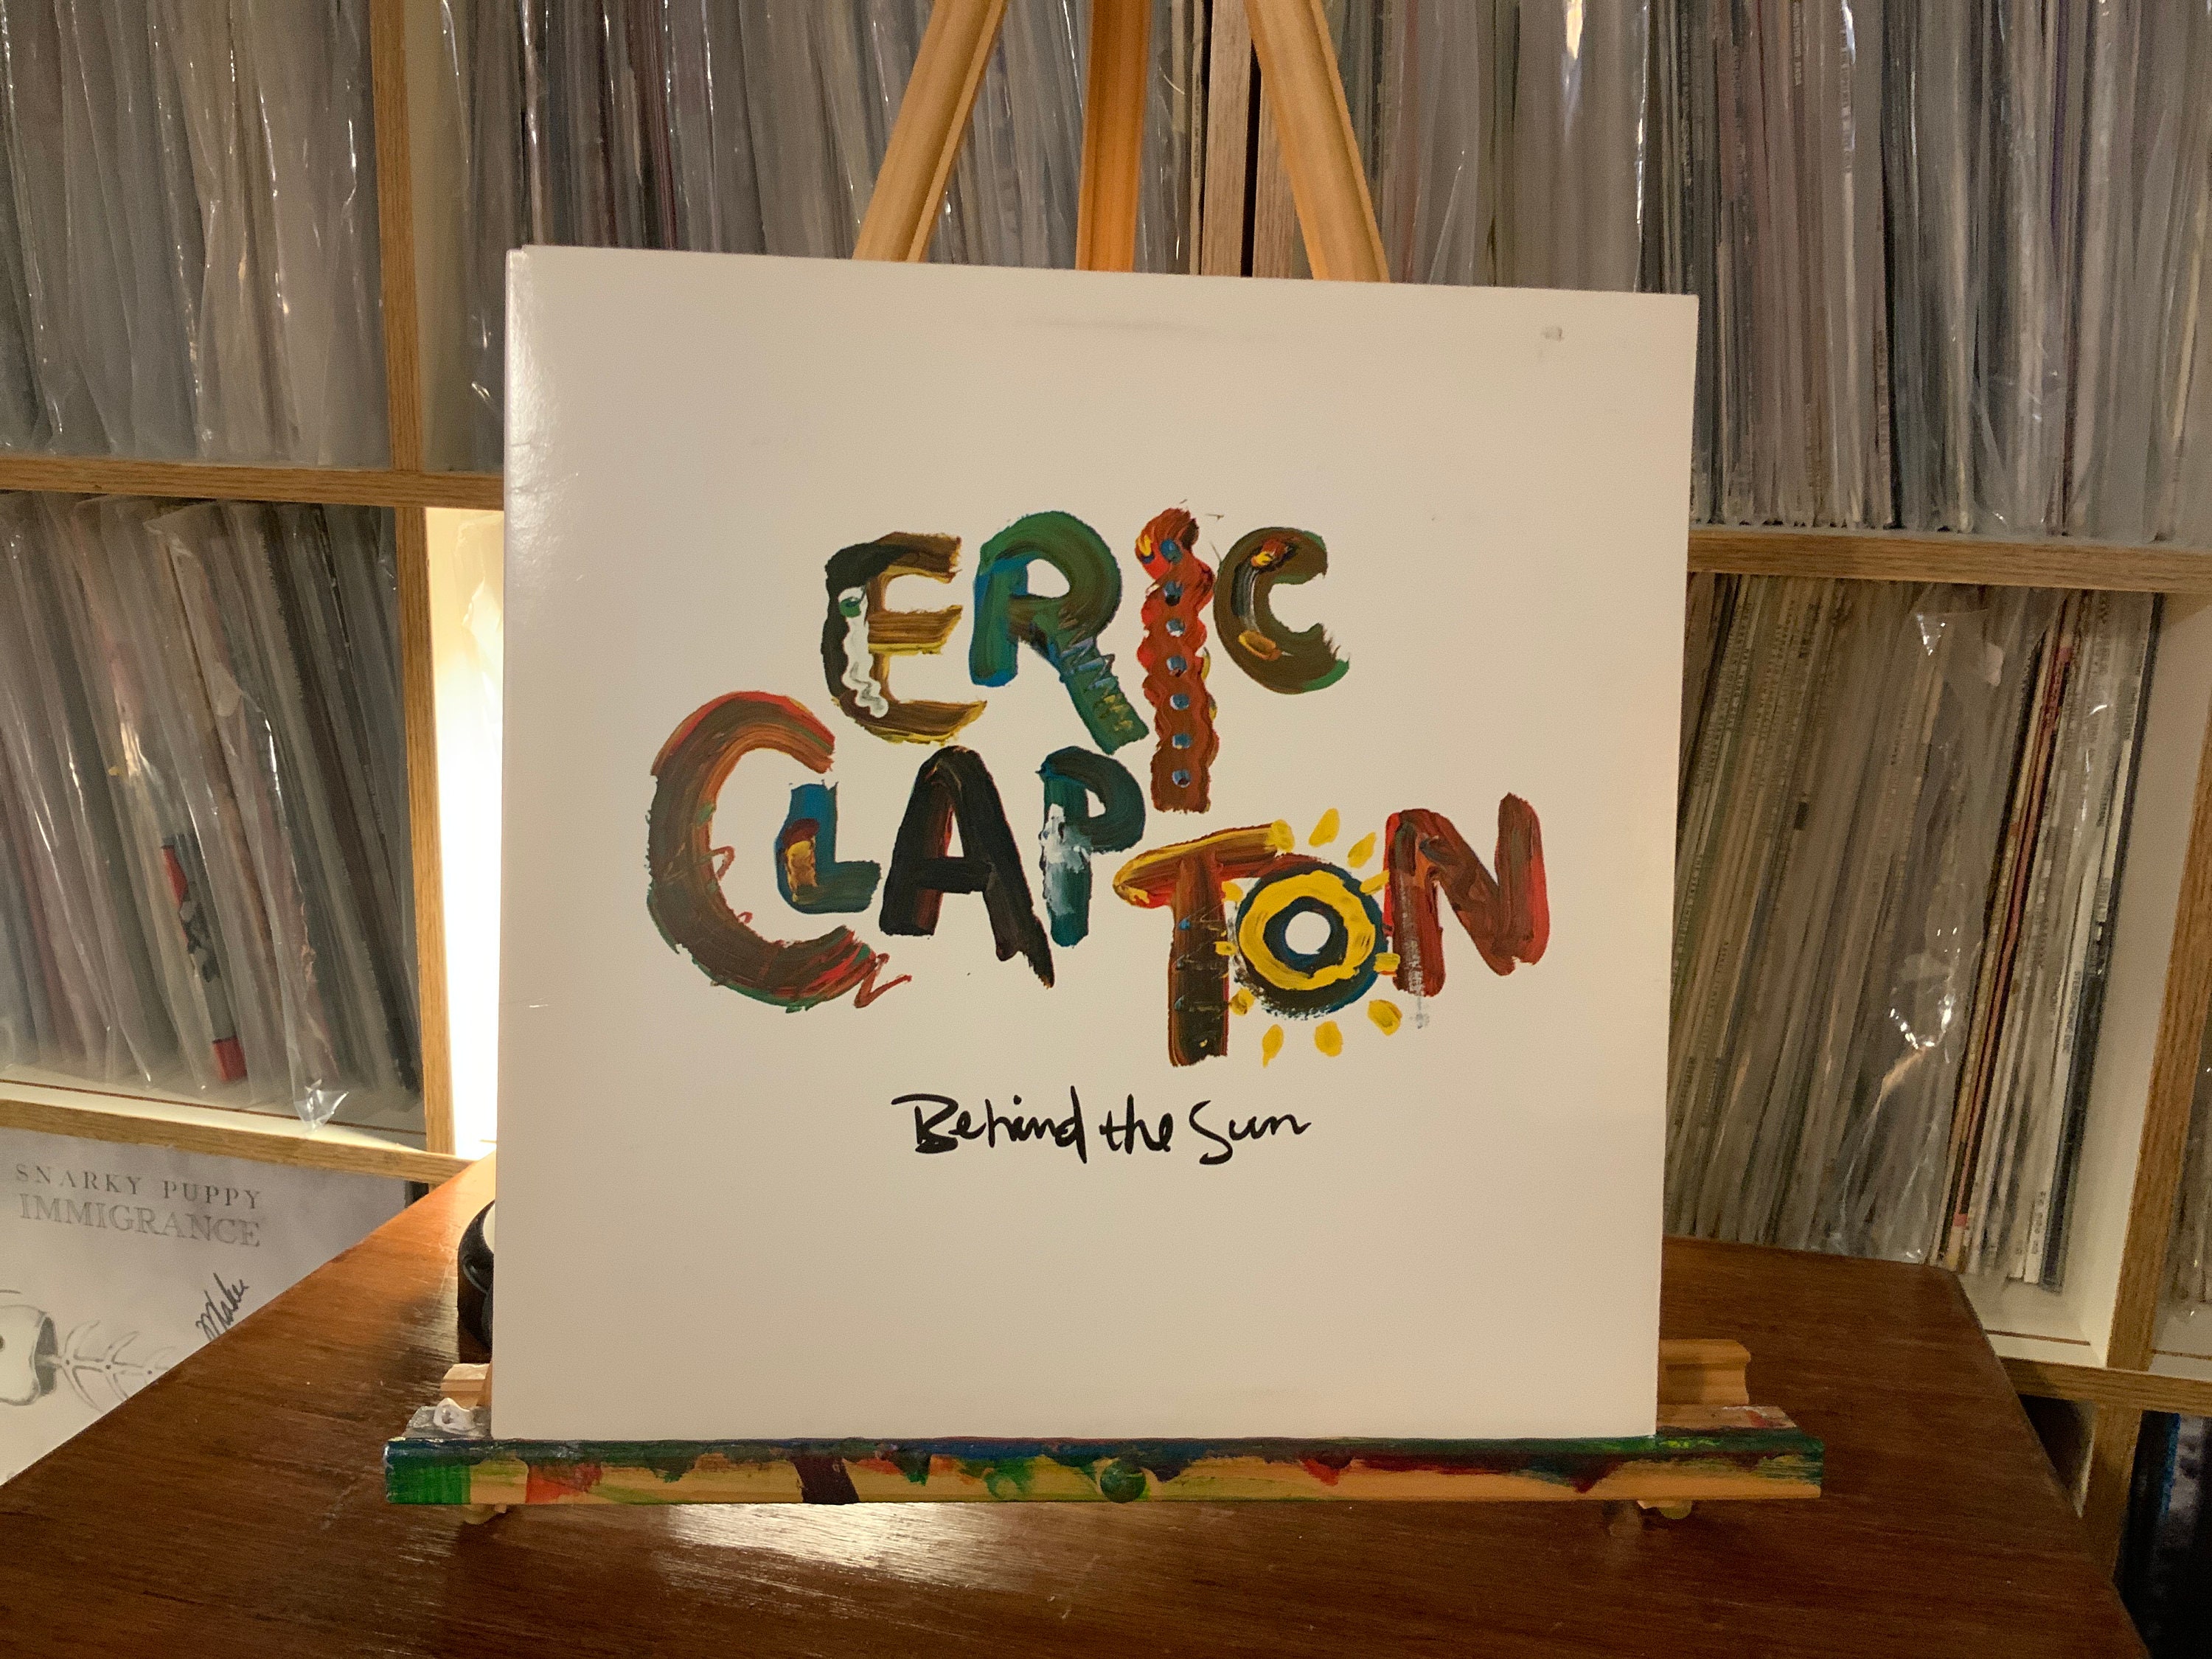 Eric Clapton Vinyl behind the Sun -